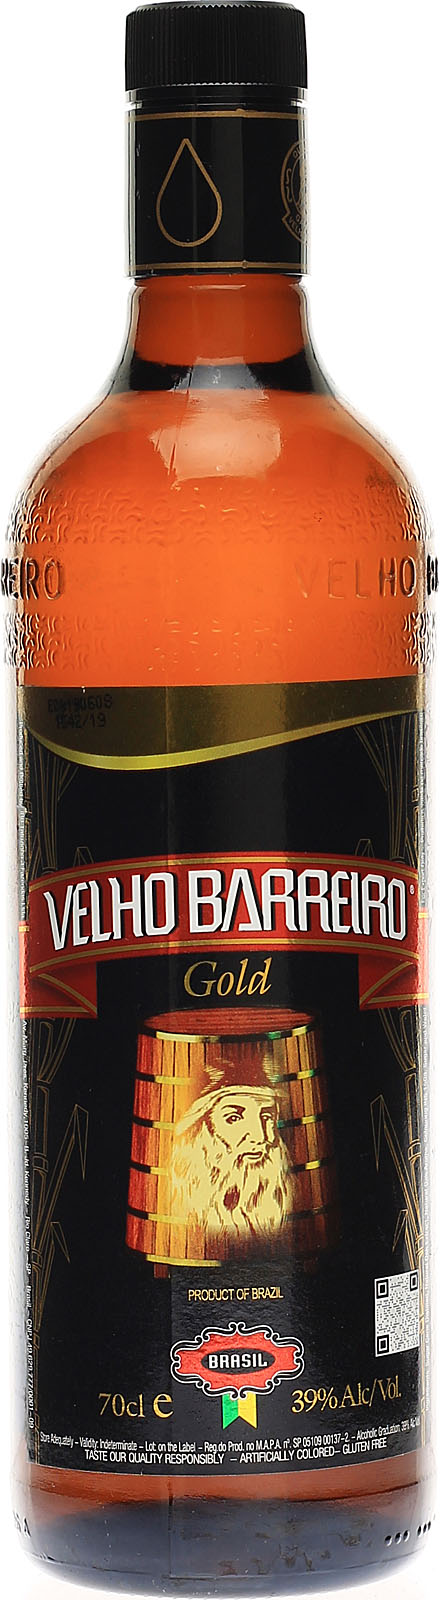 Cachaca Velho 0,7 Jahre) Gold Vol Barreiro 39% (3 Liter